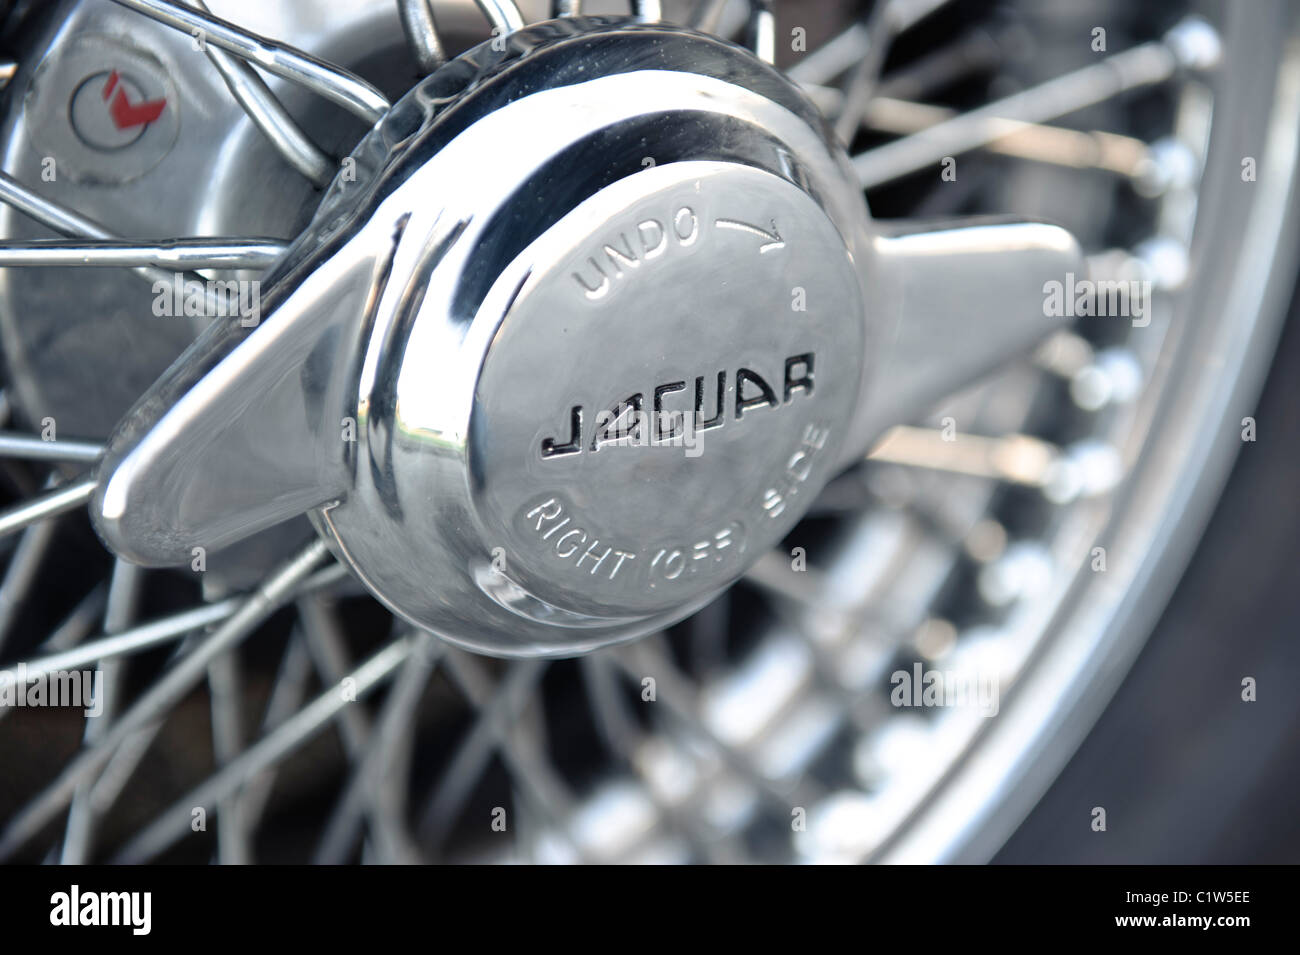 Jaguar E-Type chrome front wheel spokes close up detail Stock Photo